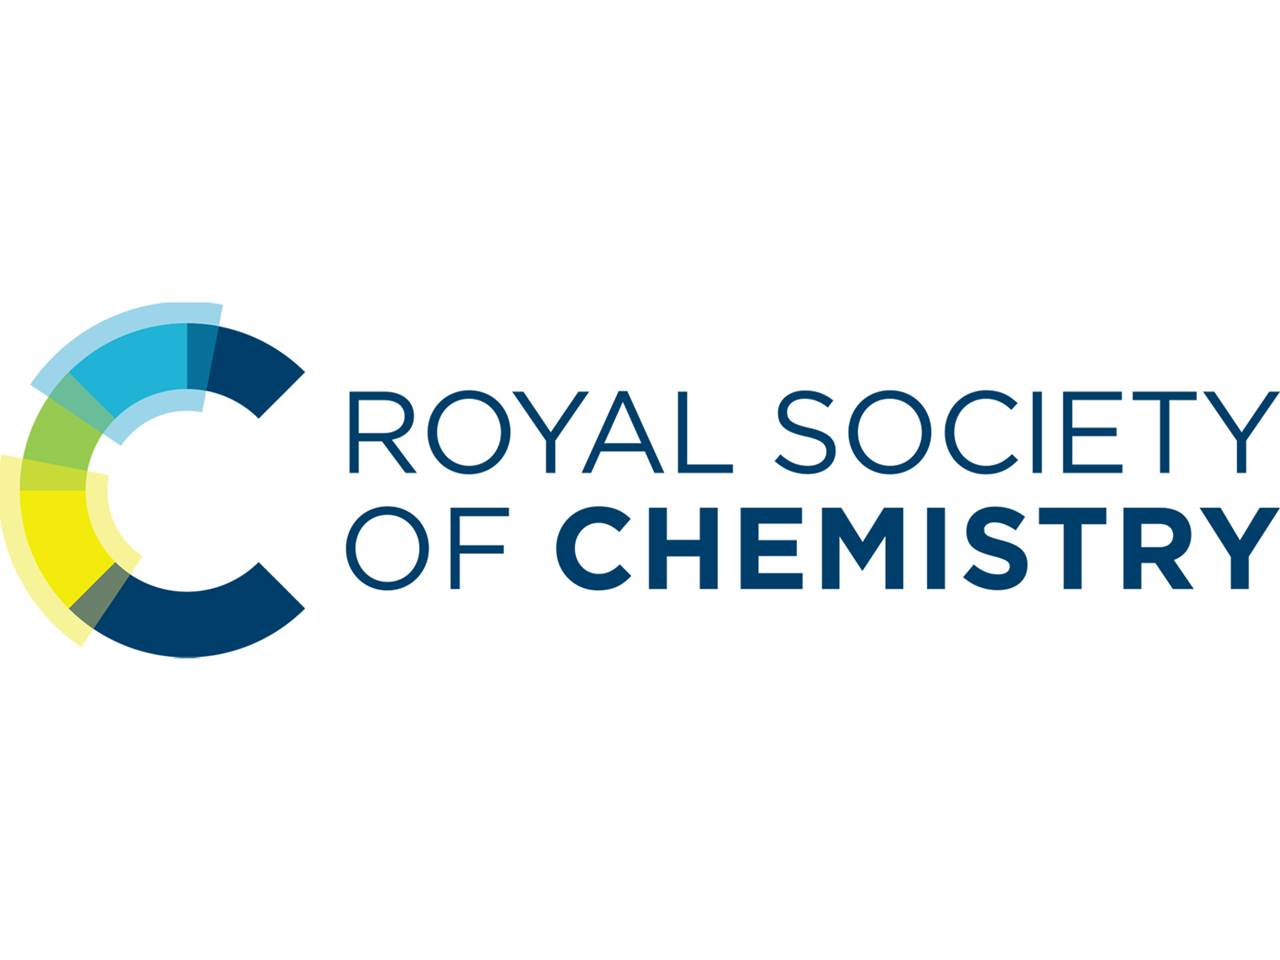 Chemical society. Royal Society of Chemistry. Royal sociaty JF chemesrty. Сокращенное название the Royal Society of Chemistry. Royal Society Journal.